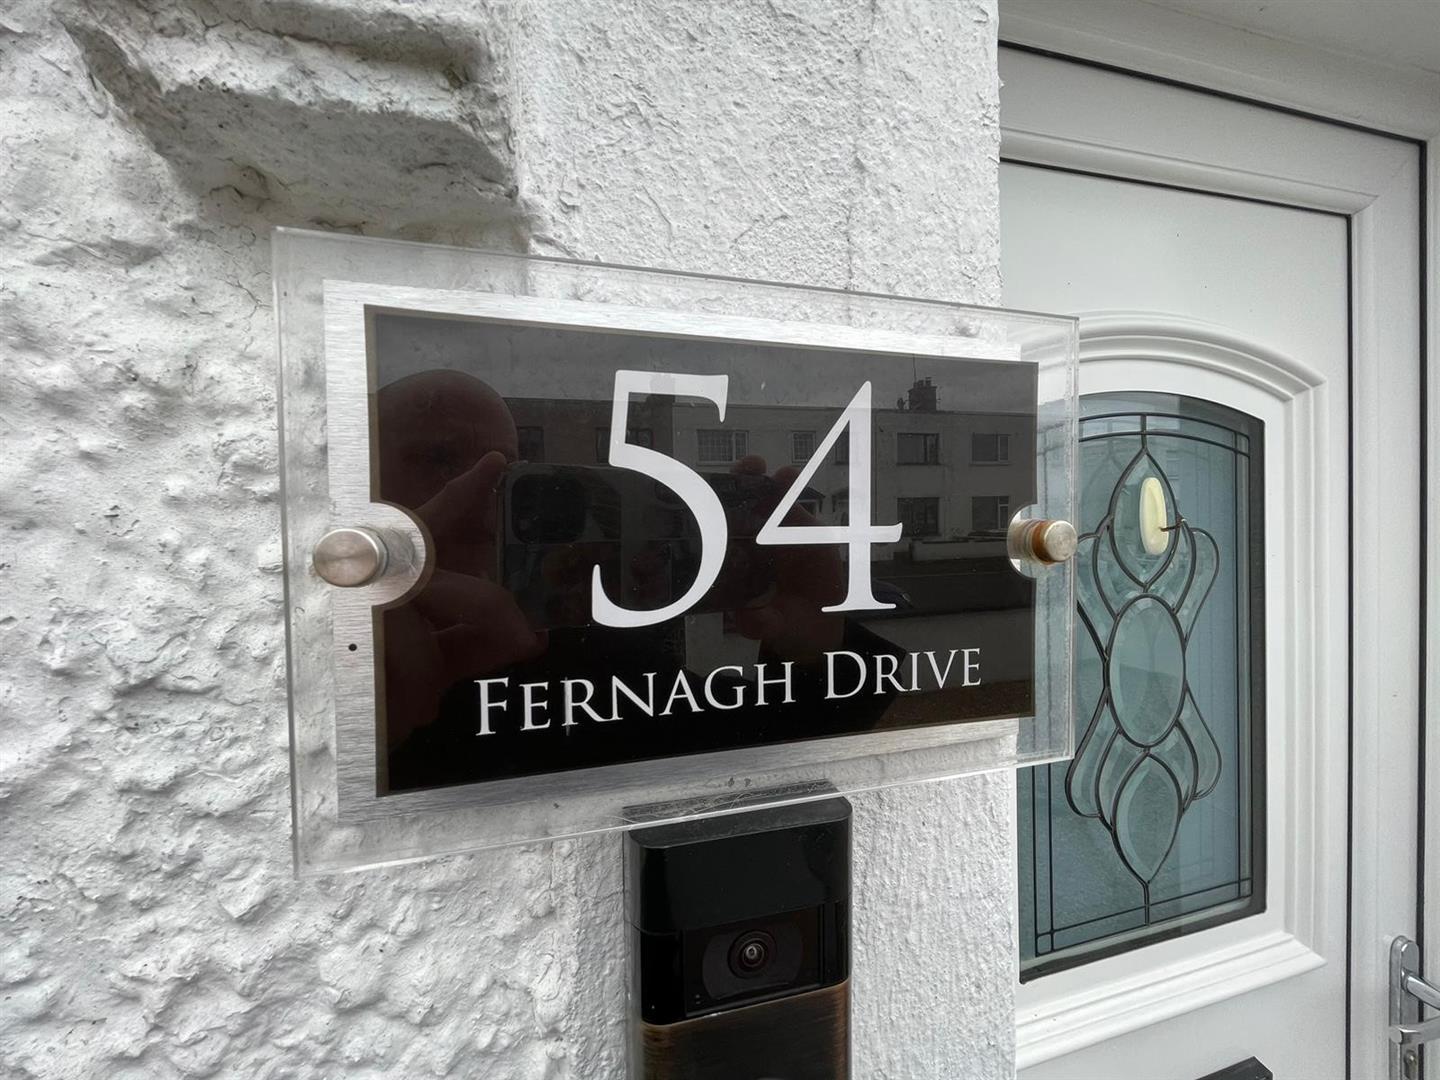 54 Fernagh Drive